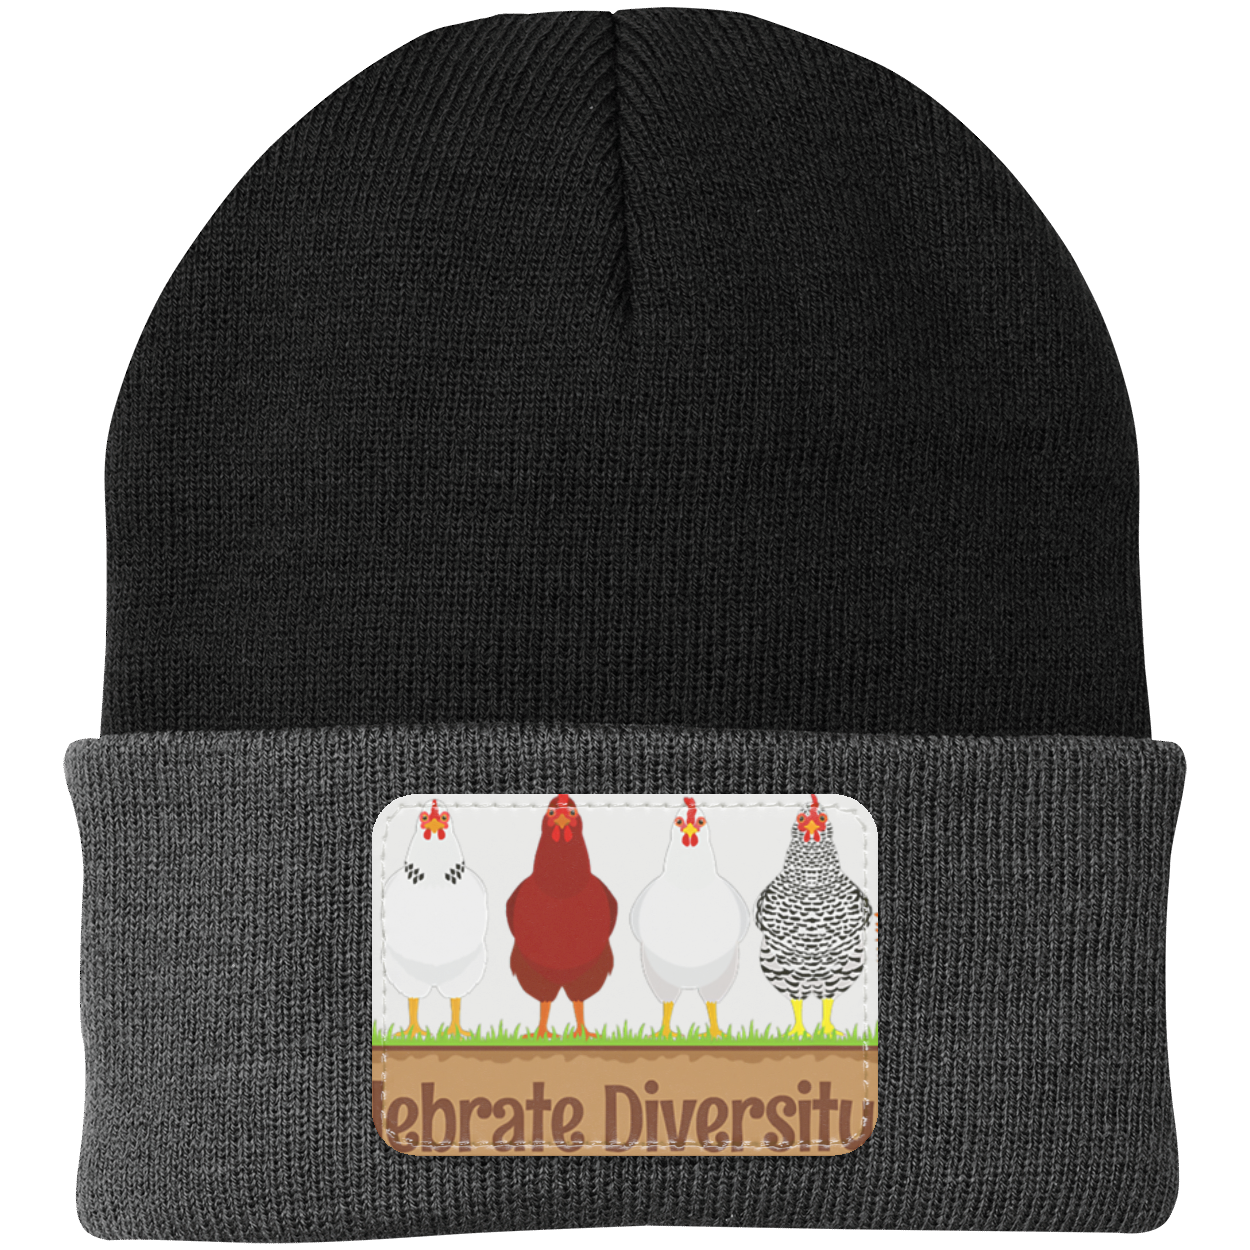 Celebrate Diversity Farm Knit Cap